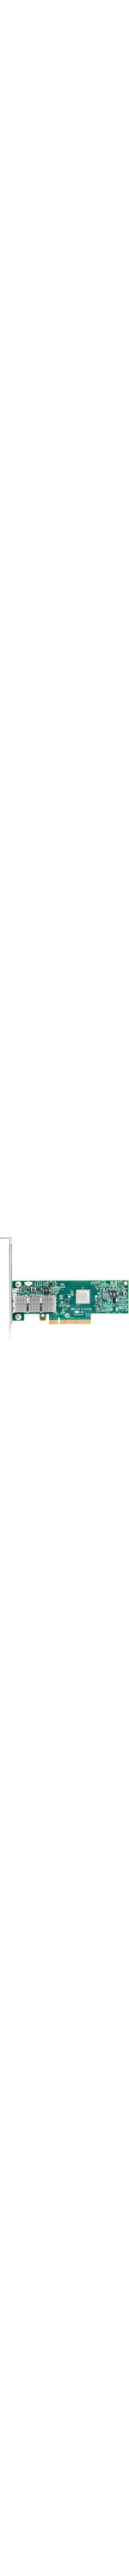 Mellanox ConnectX-4 MCX4131A-GCAT 50Gigabit Ethernet Card - PCI Express 3.0 x8 - 1 Ports - Optical Fiber